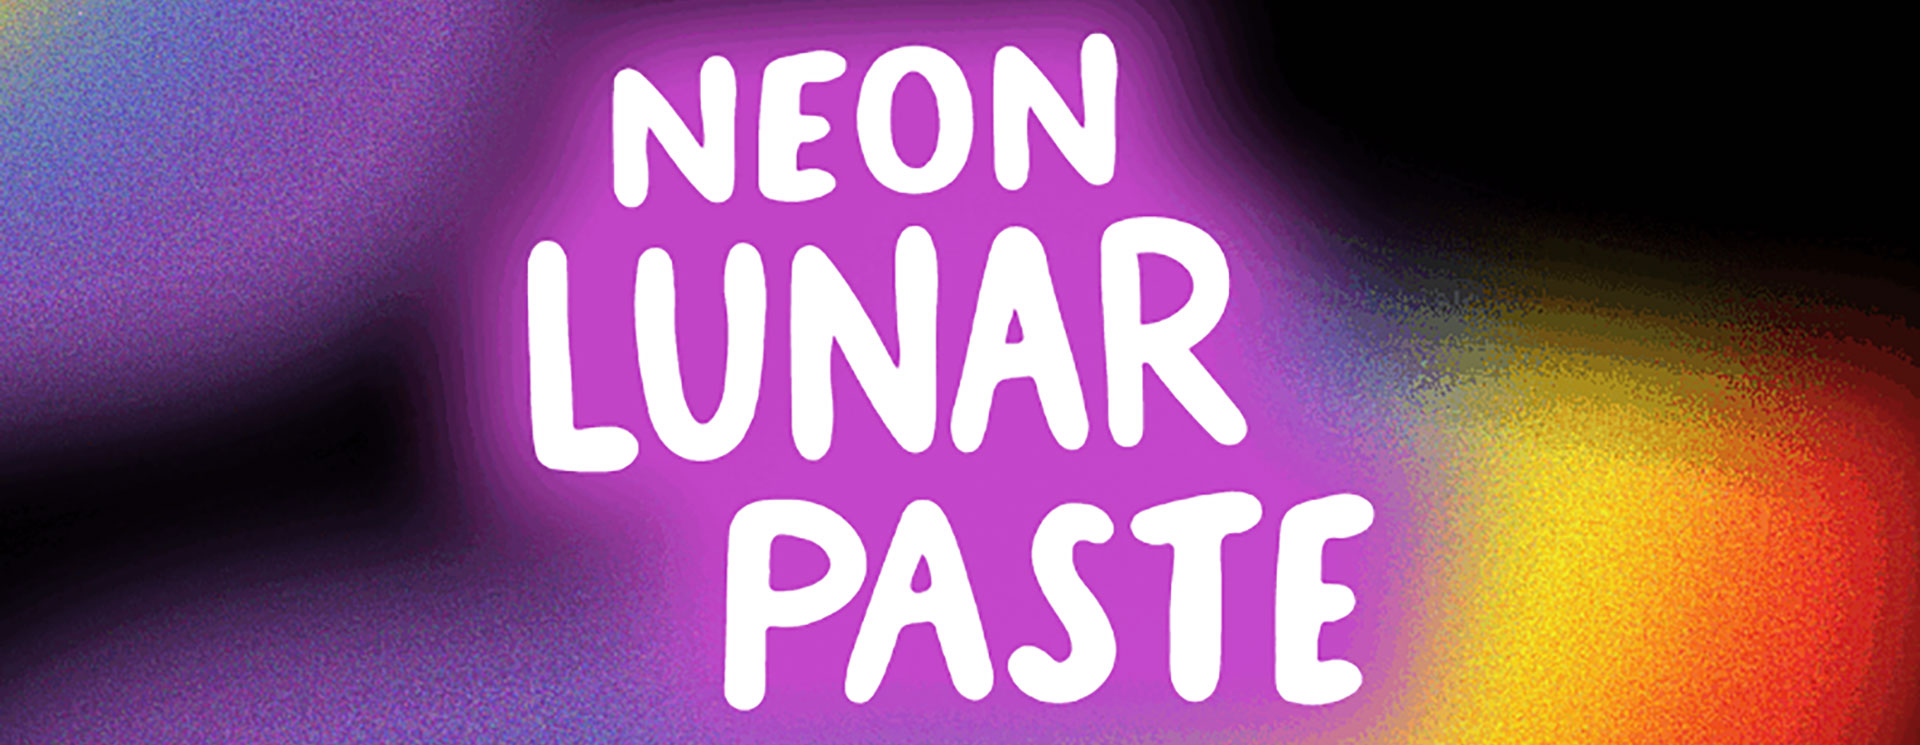 Simon Hurley : Neon Lunar Pastes